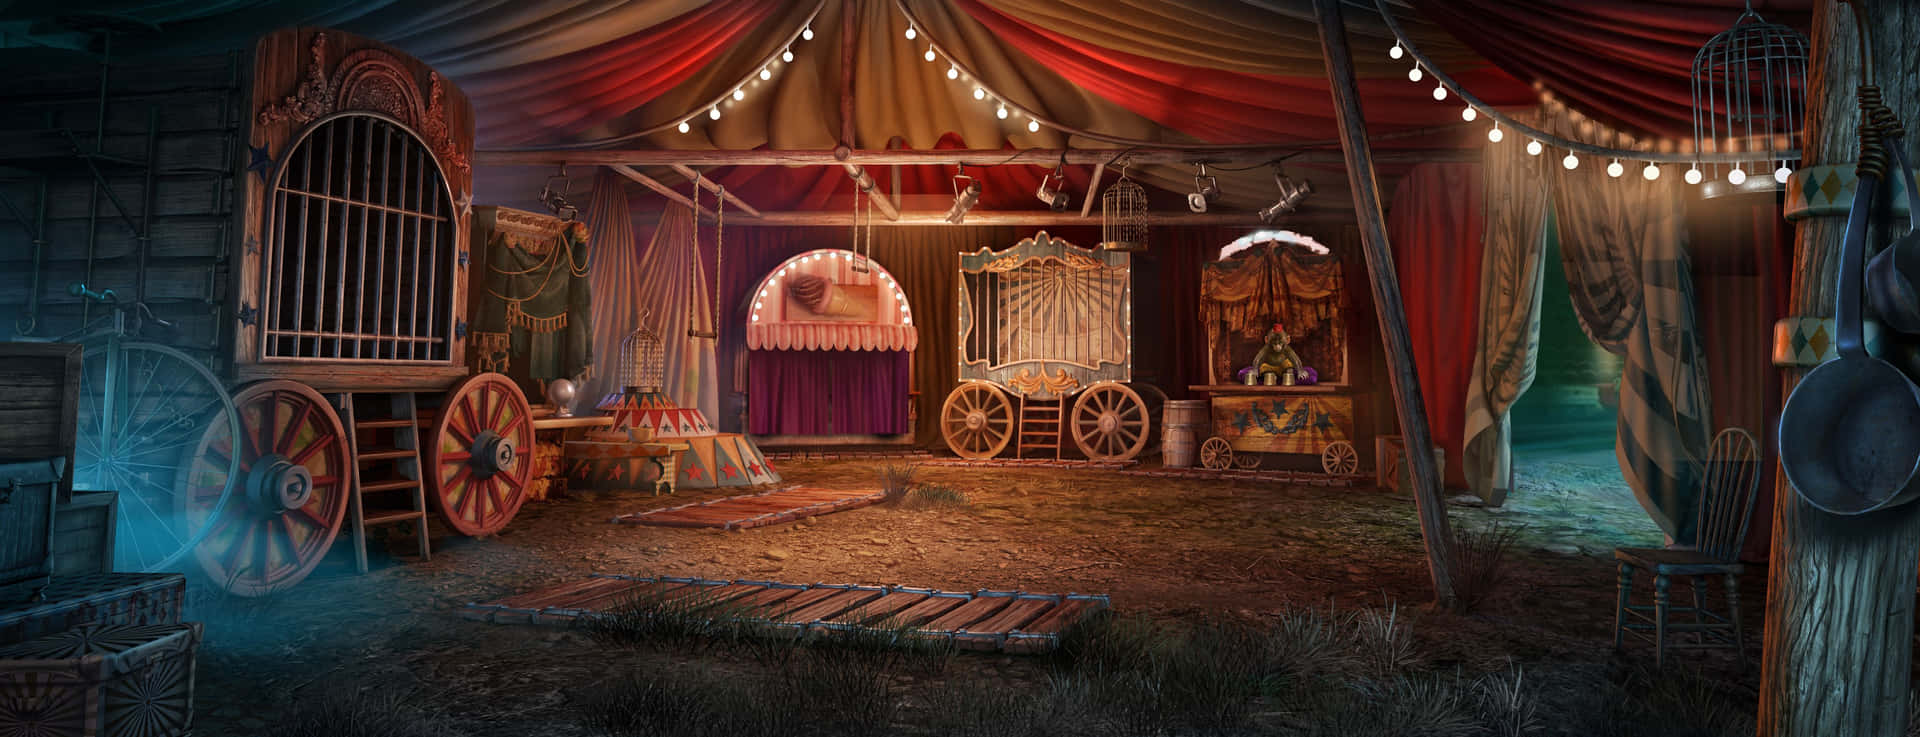 Circus Stage Background by WillDinoMaster55 on DeviantArt